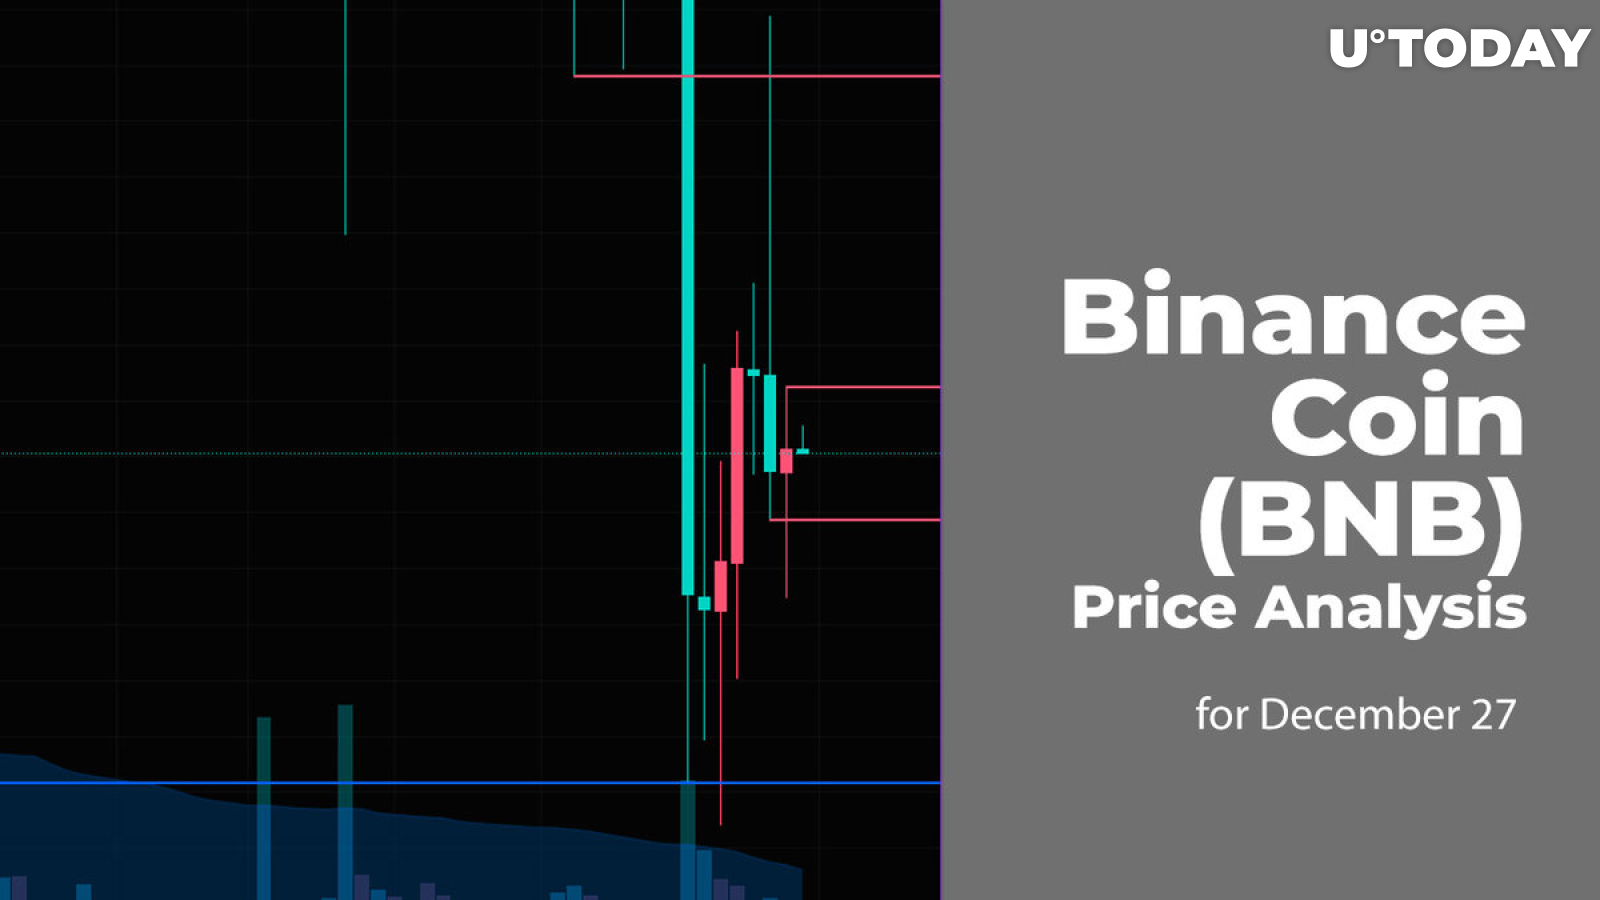 Binance Coin (BNB) Price Analysis for December 27